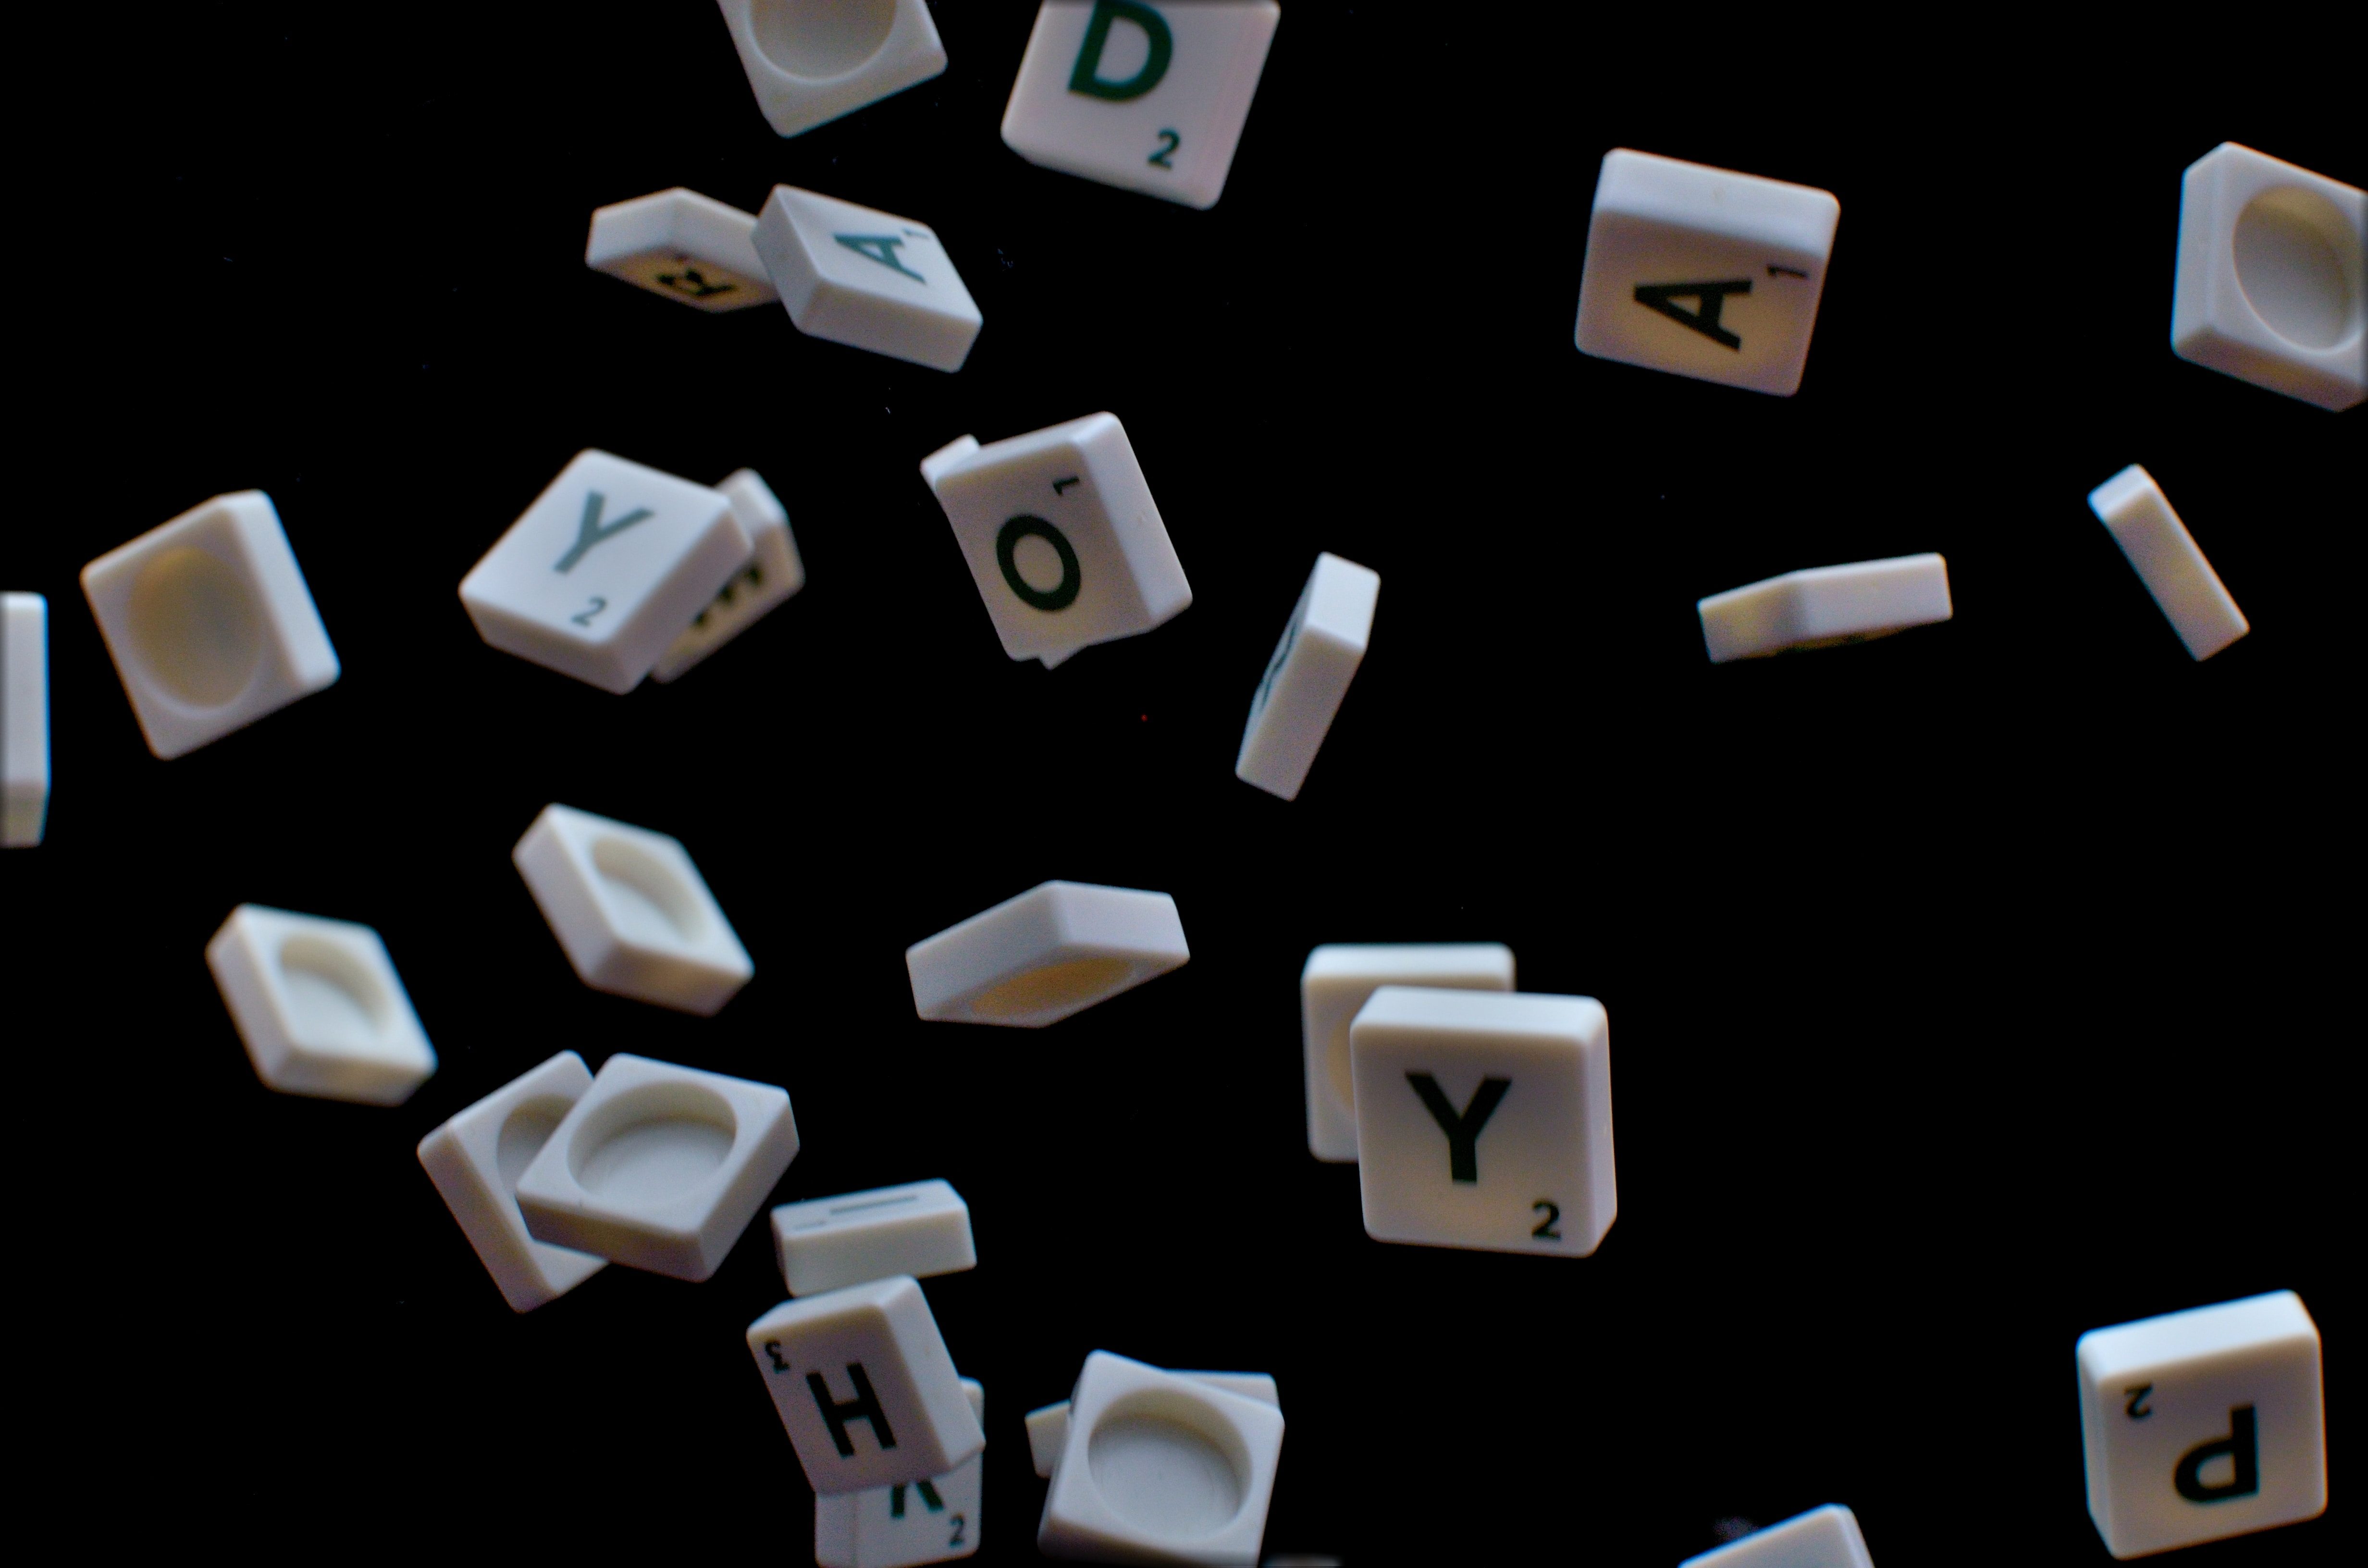 Scrabble tiles falling through black space